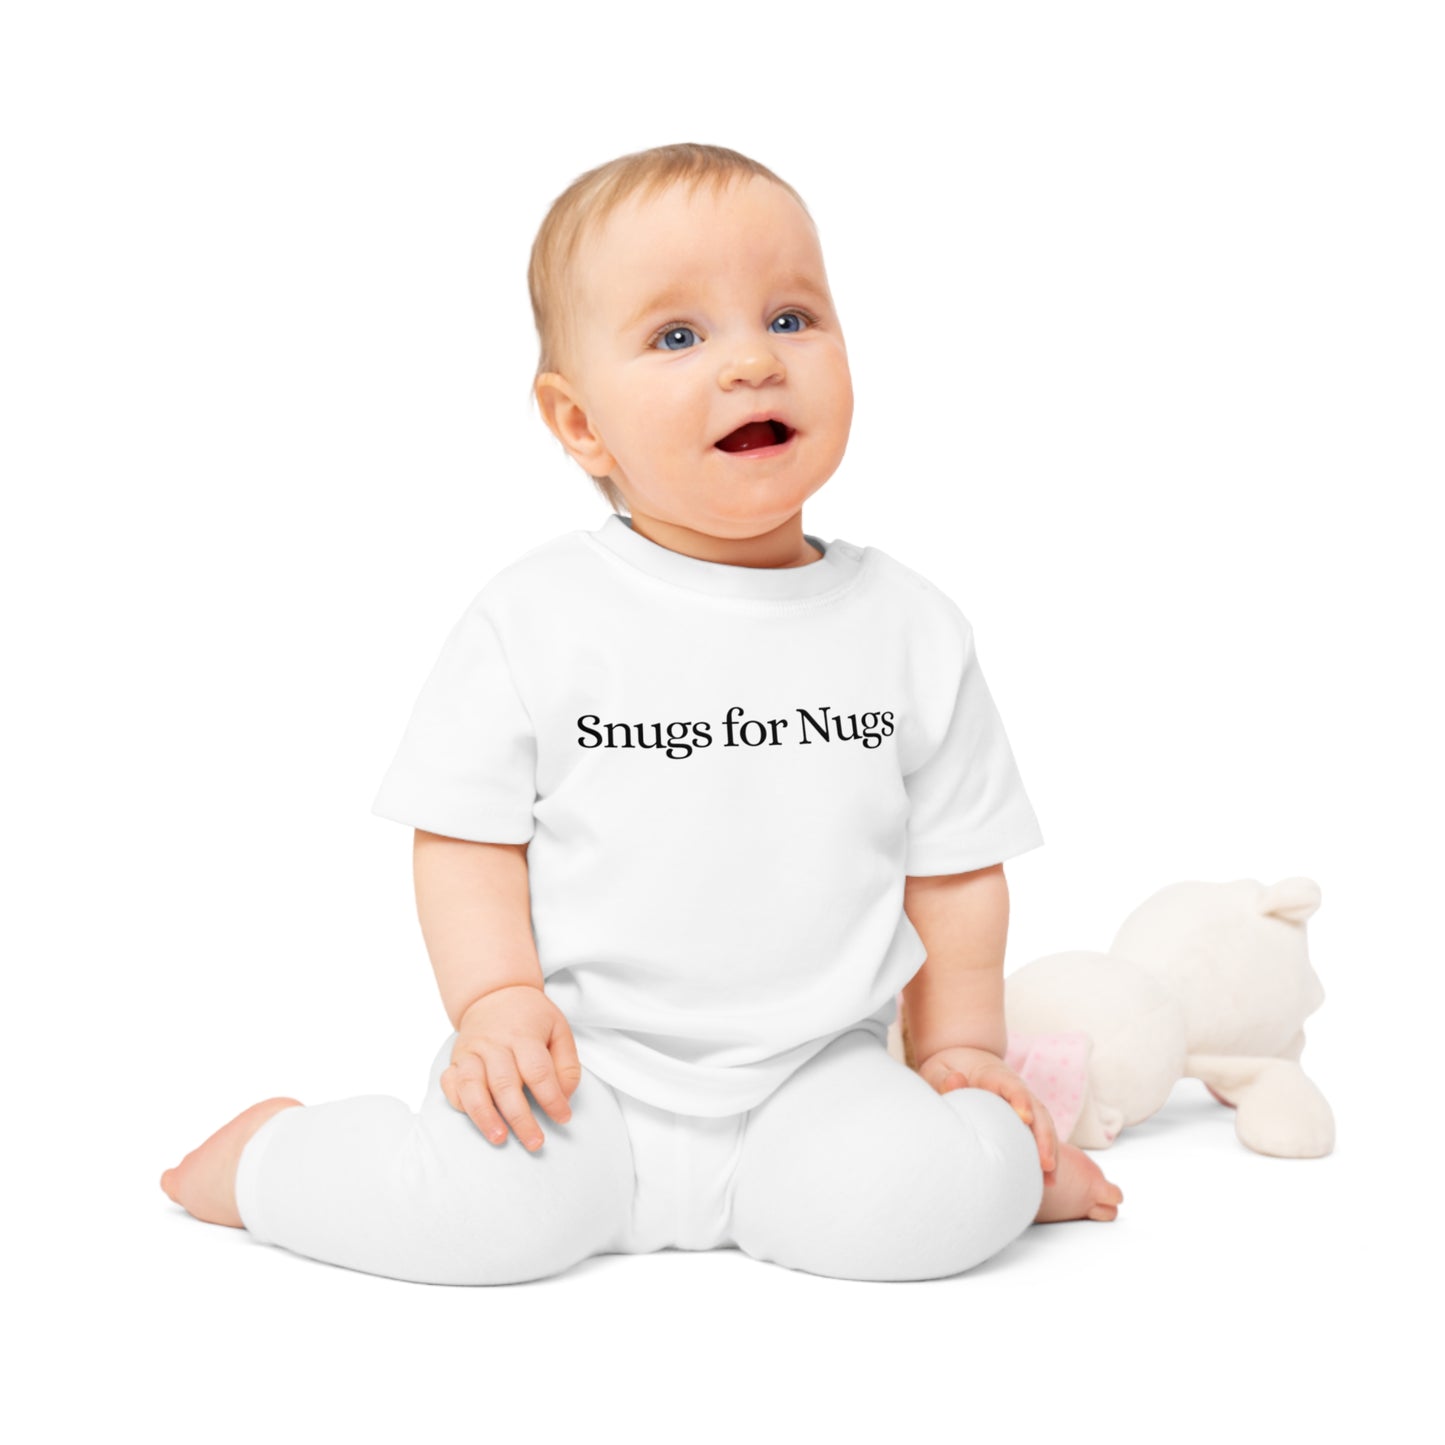 Snugs for Nugs - Baby T-Shirt